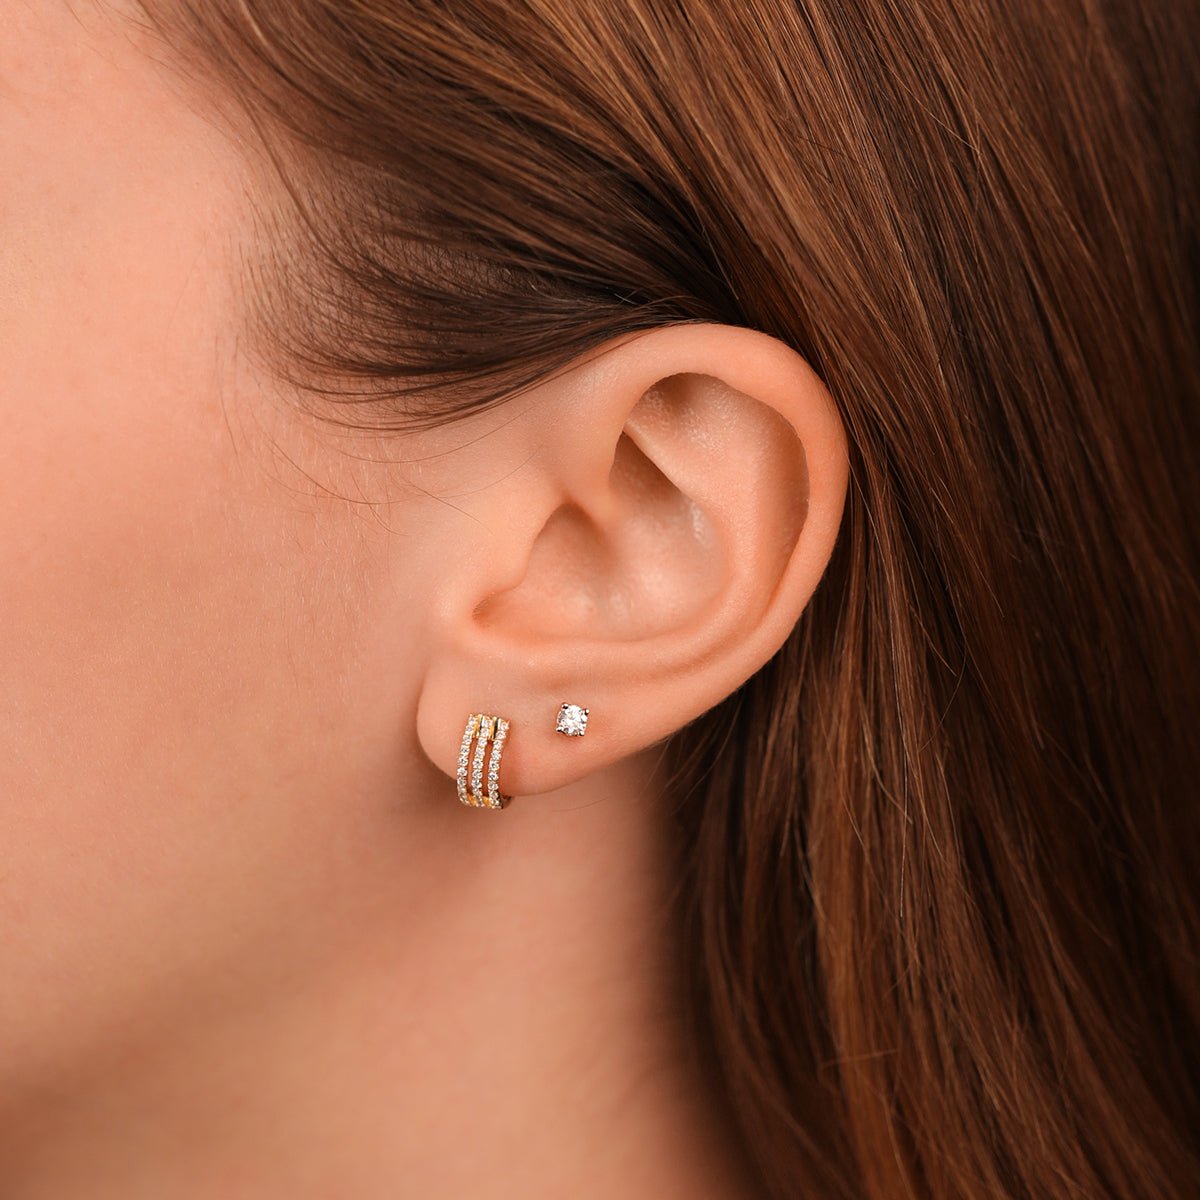 Triple Diamond Huggie Earrings Earrings Estella Collection #product_description# 17278 14k Diamond Earrings #tag4# #tag5# #tag6# #tag7# #tag8# #tag9# #tag10#